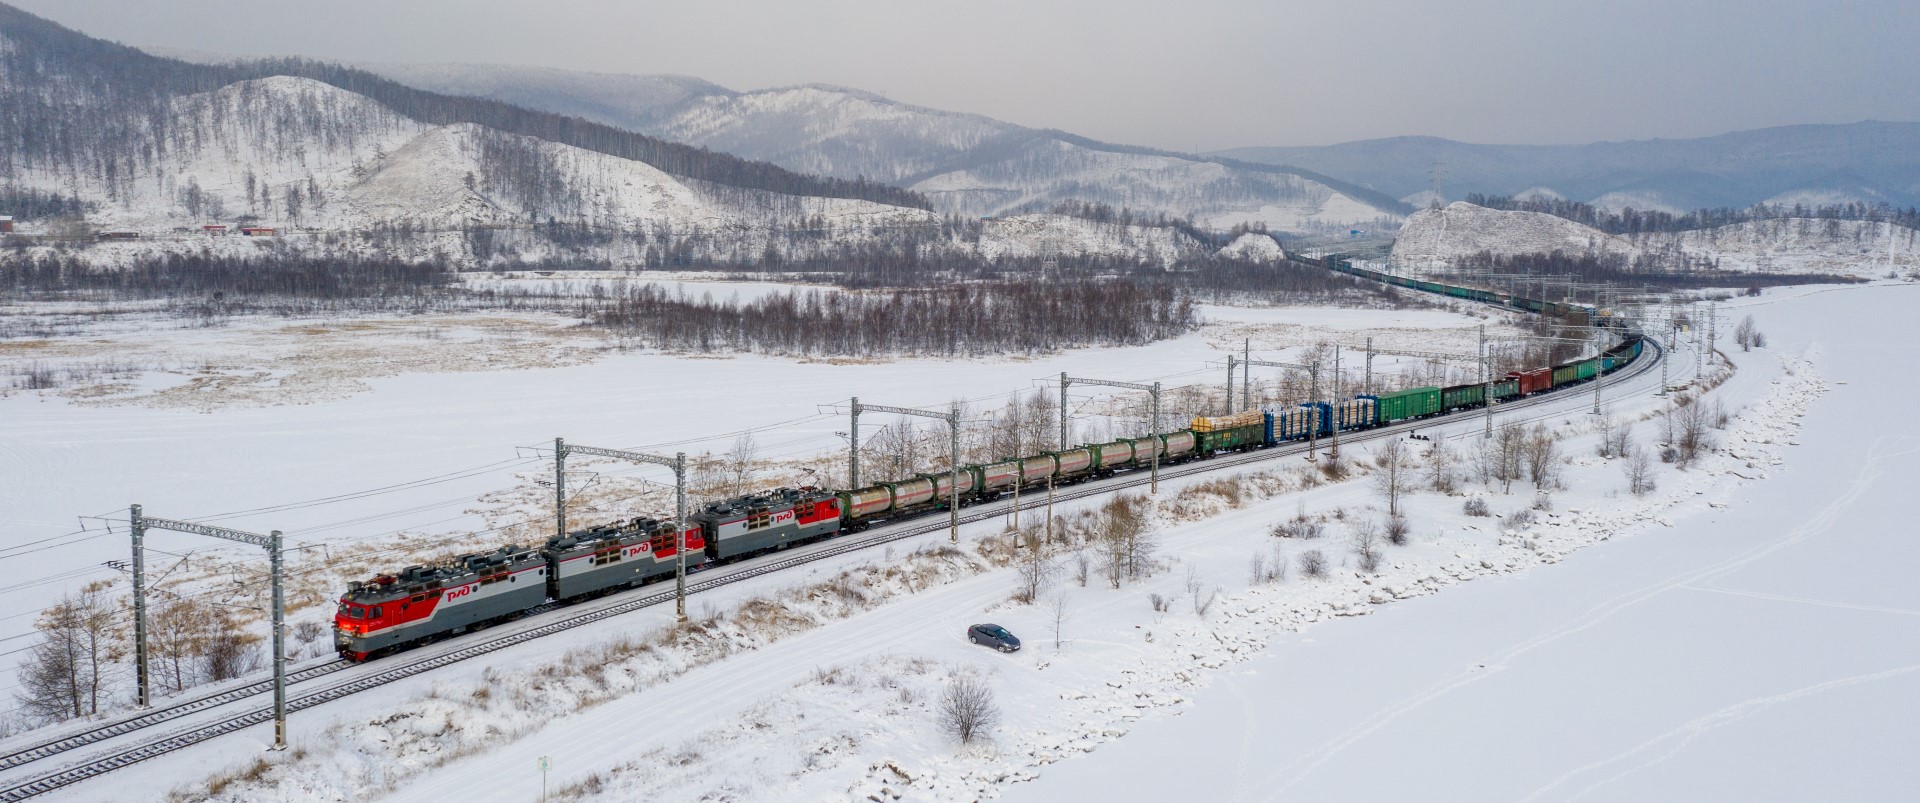 The train on the winter landscape